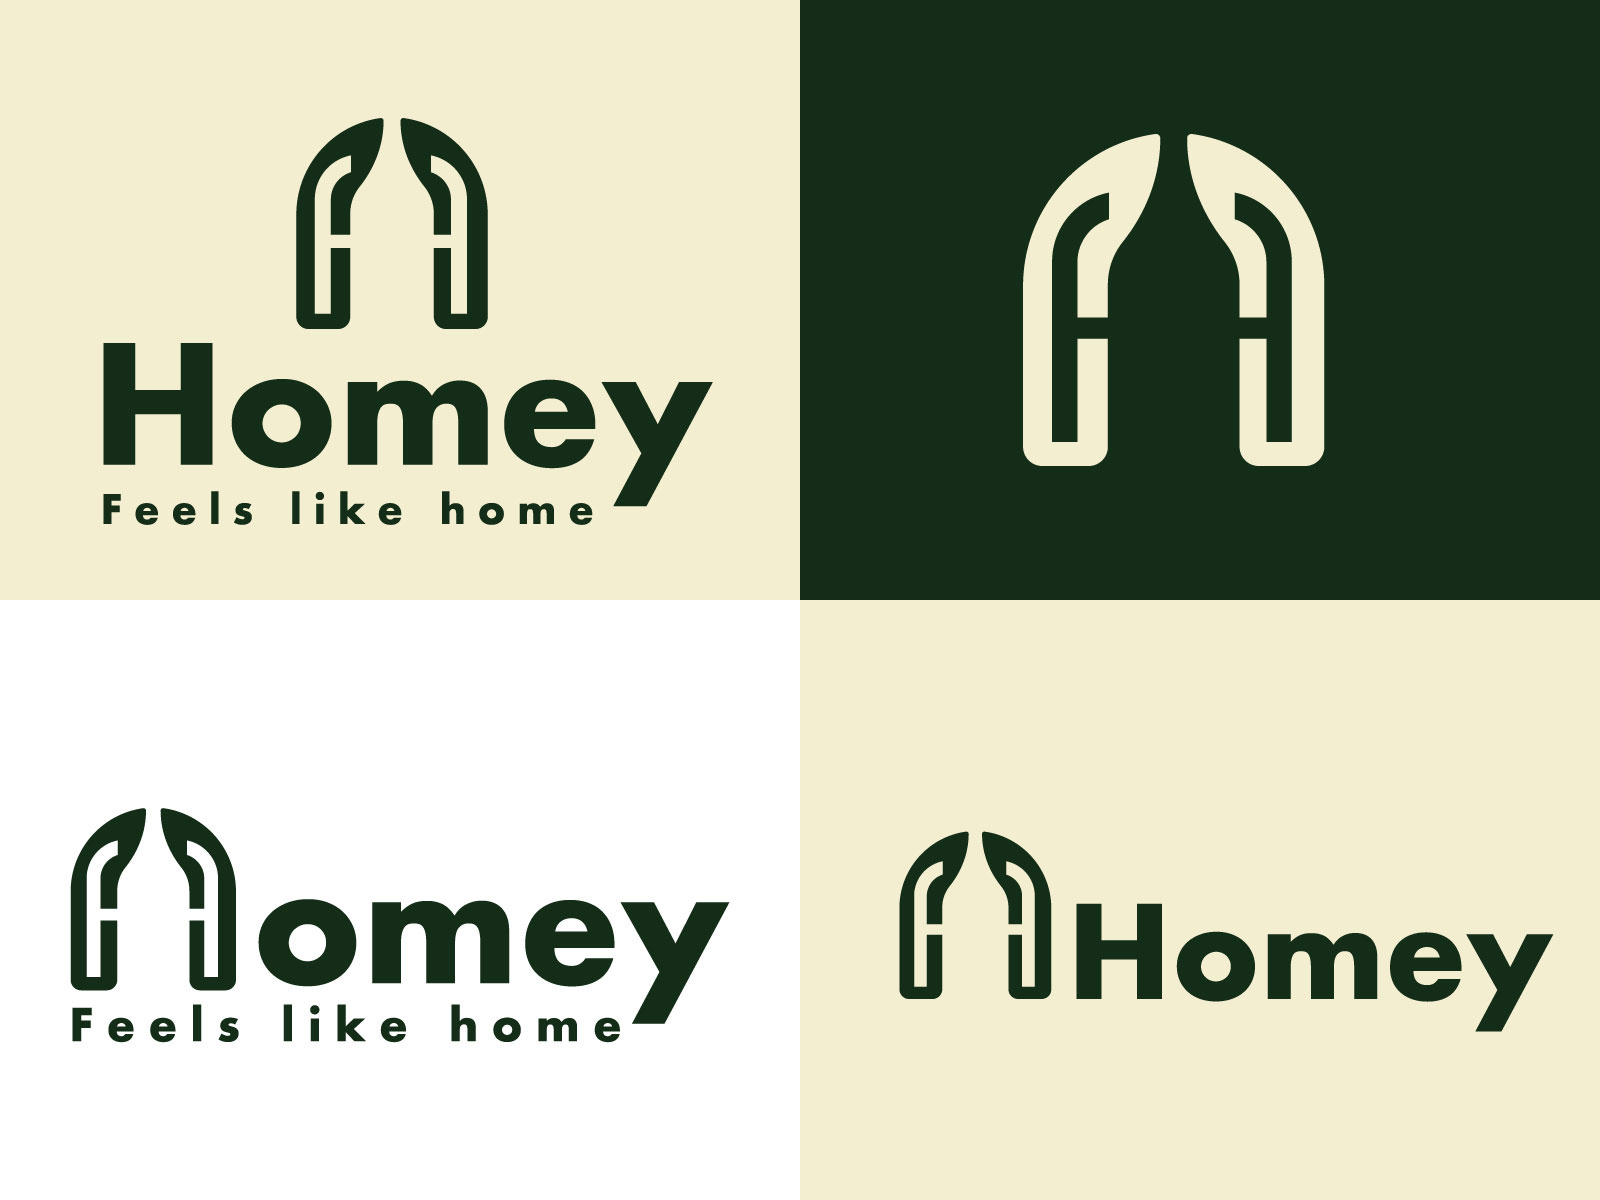 Homey logo concept by Onpixo on Dribbble